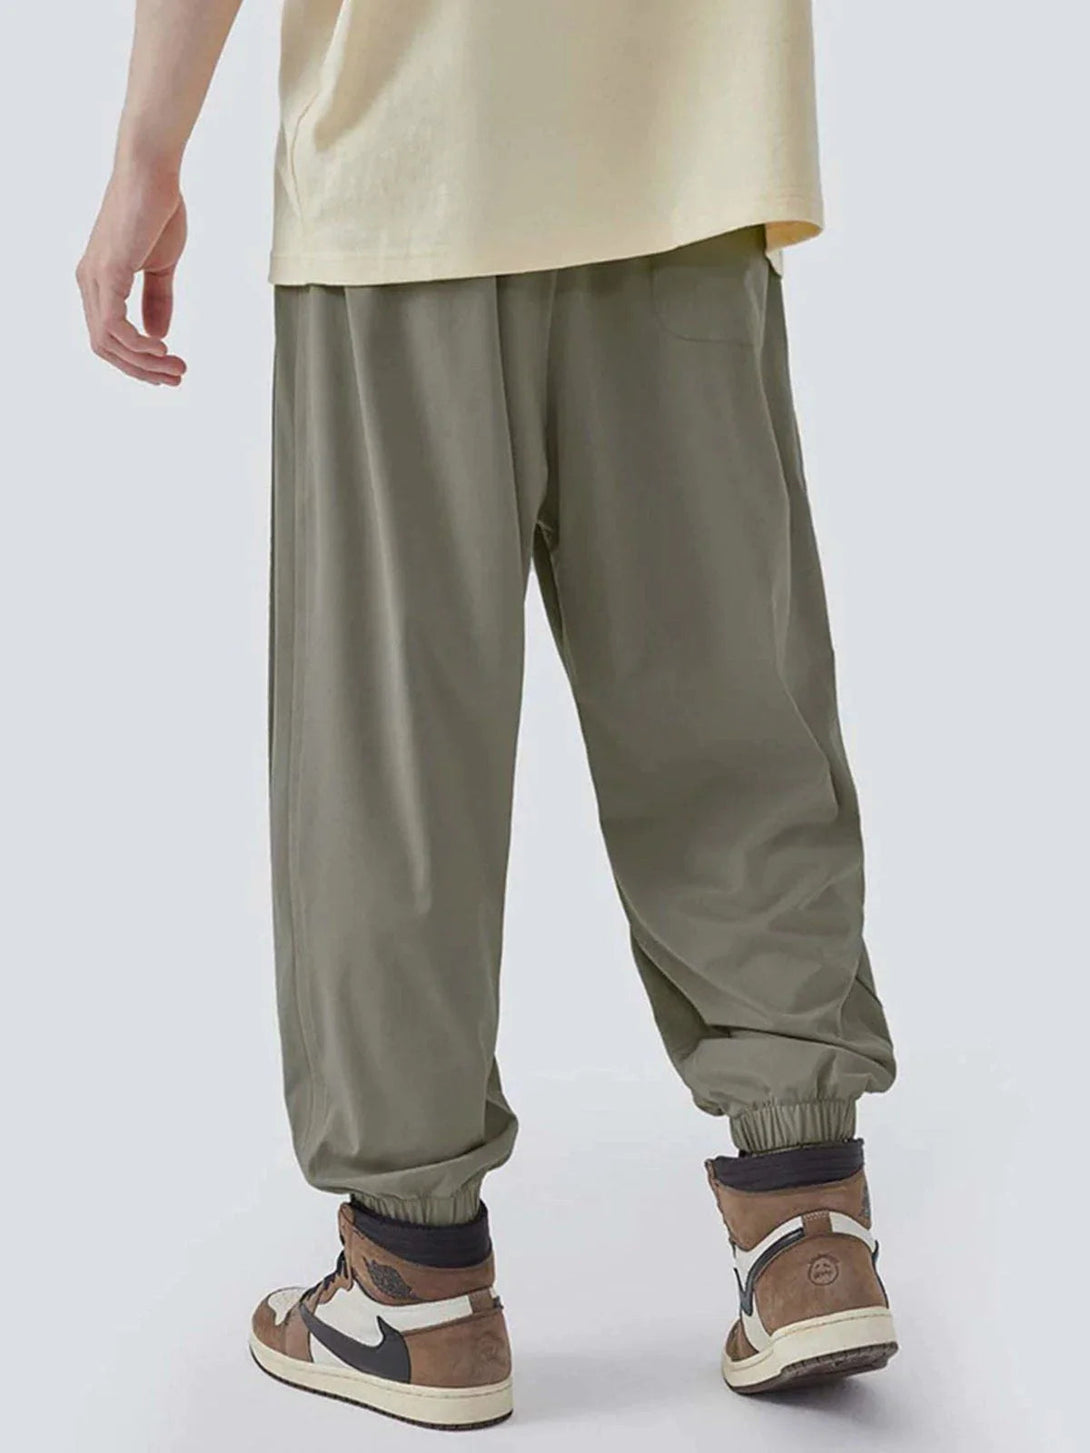 Majesda® - Loose Pleats Pants outfit ideas streetwear fashion